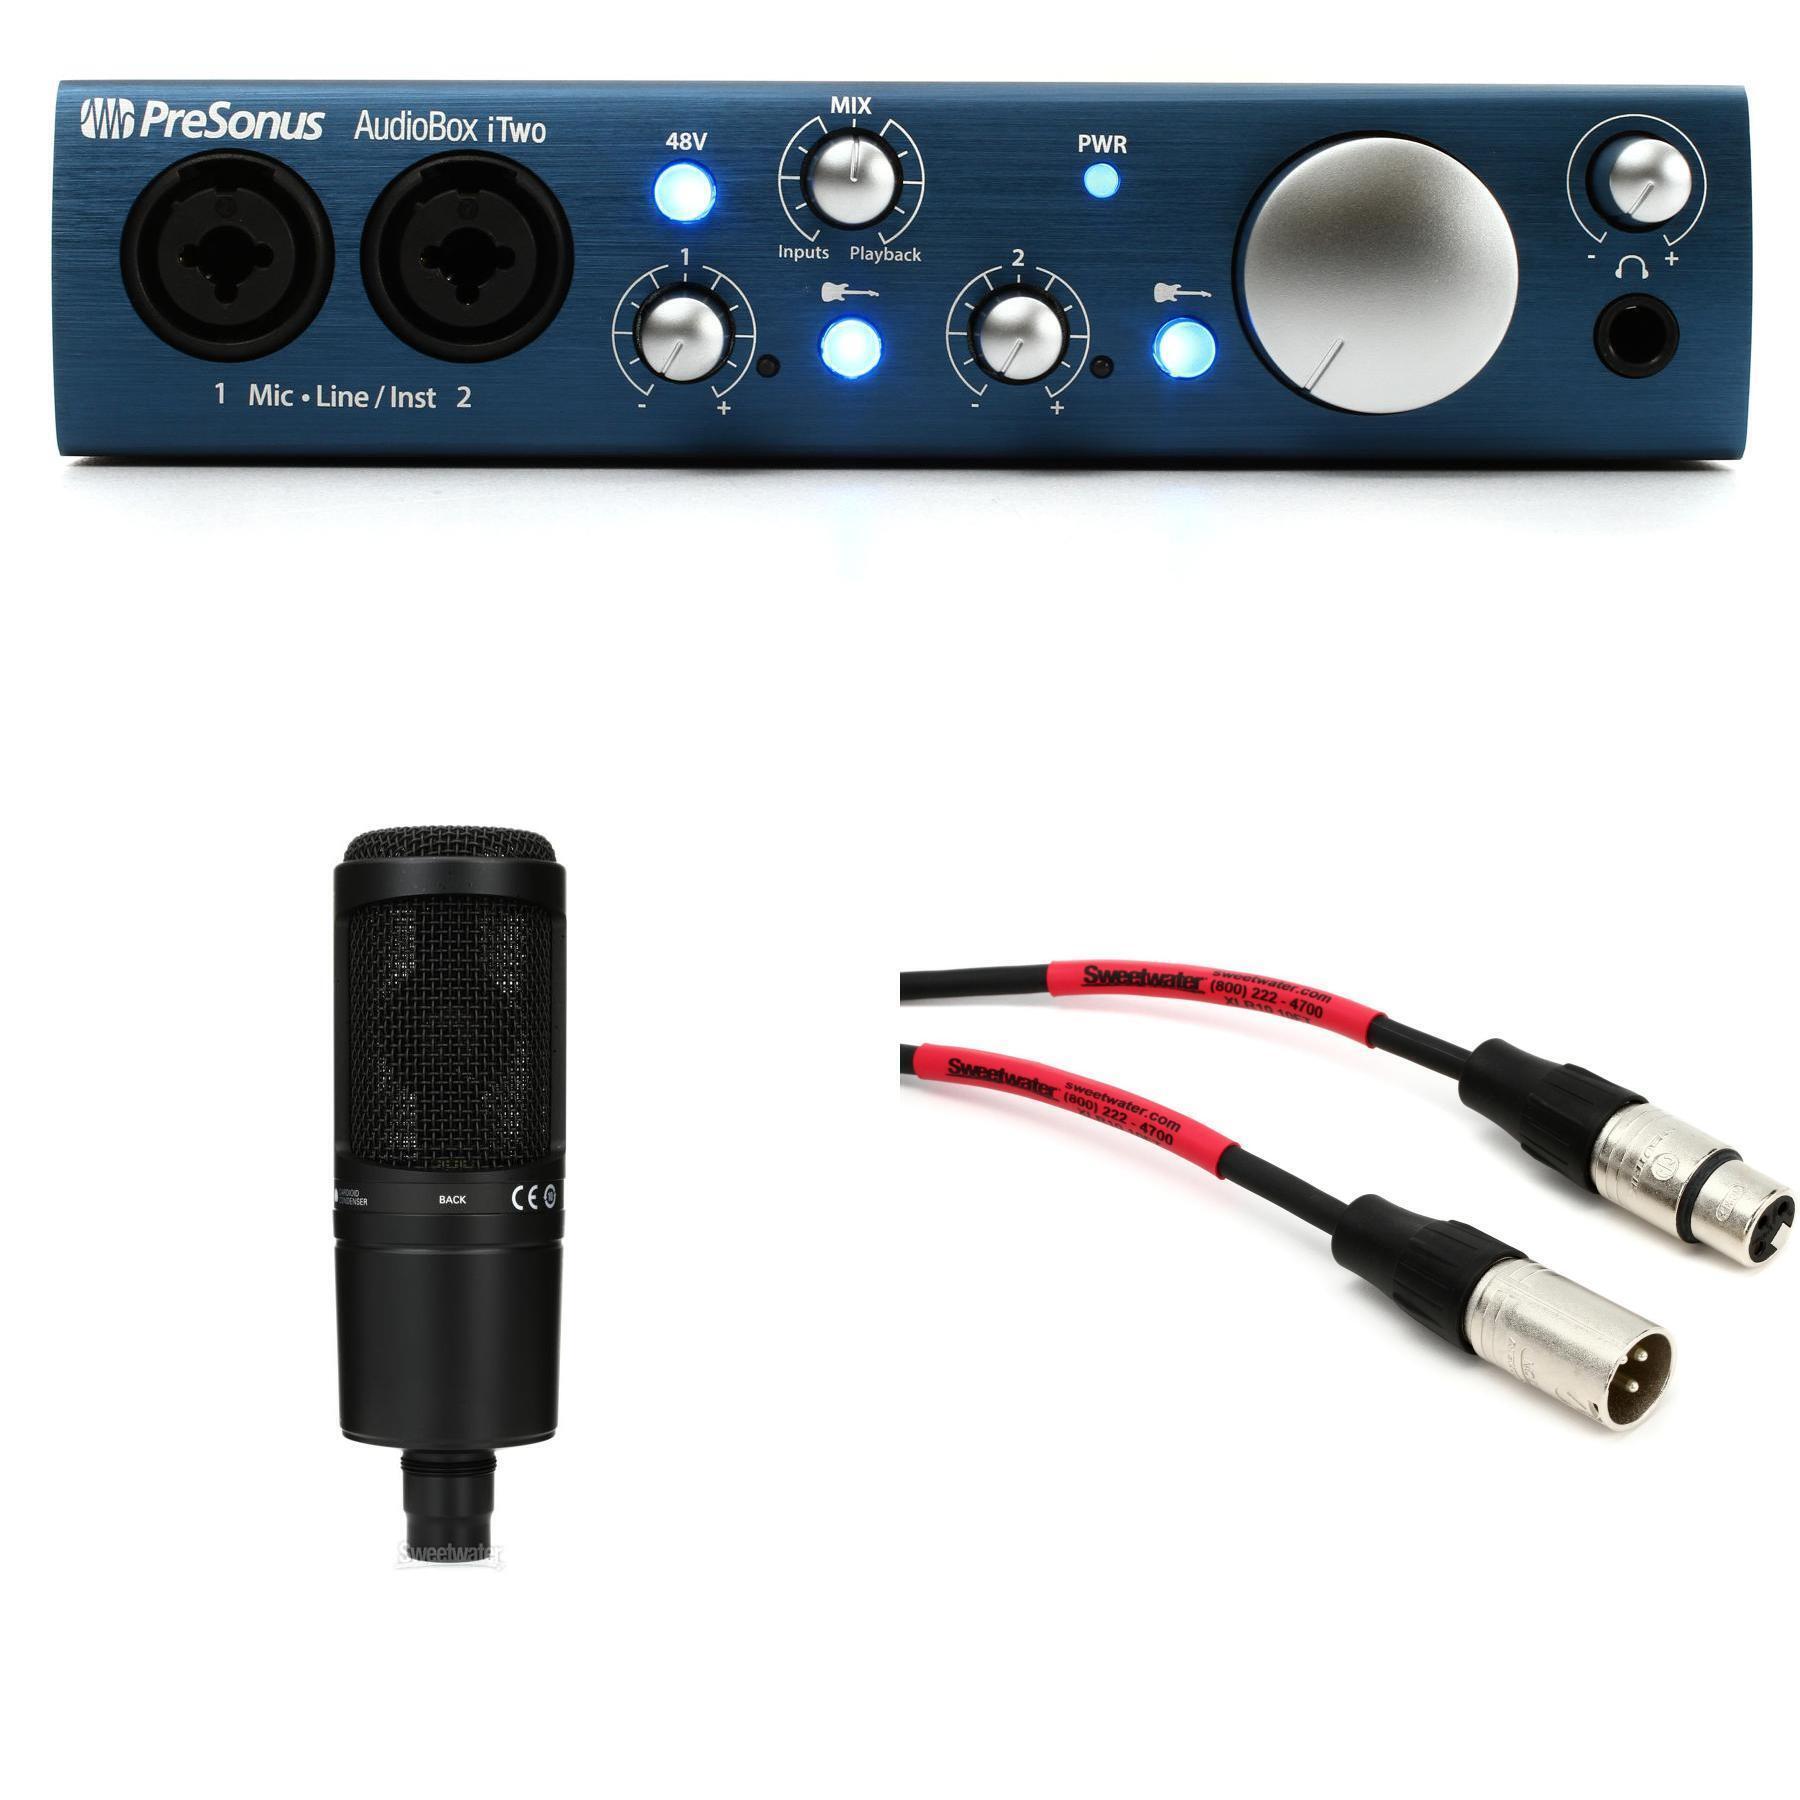 Rode NT1-A Recording Microphone Package with PreSonus AudioBox USB,  Sennheiser Headphones, & Stand